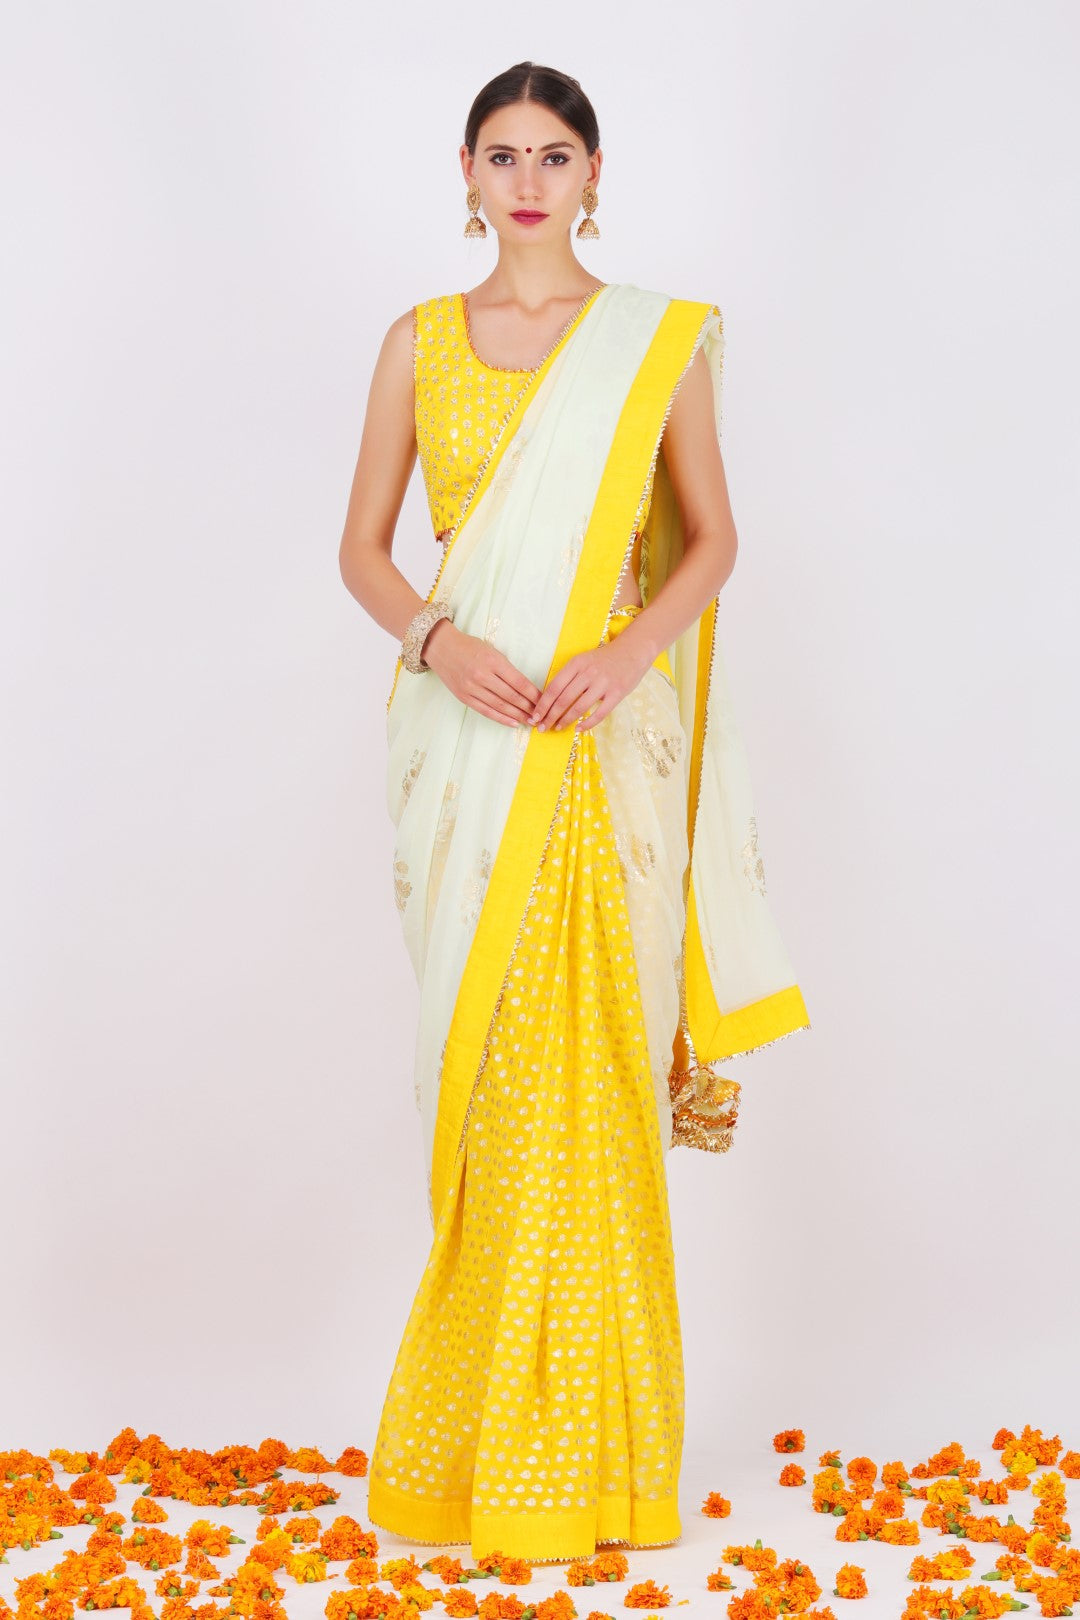 Pista georgette jaipuri guldasta foil printed palla sari with yellow jasmine bud foil printed tie up back blouse